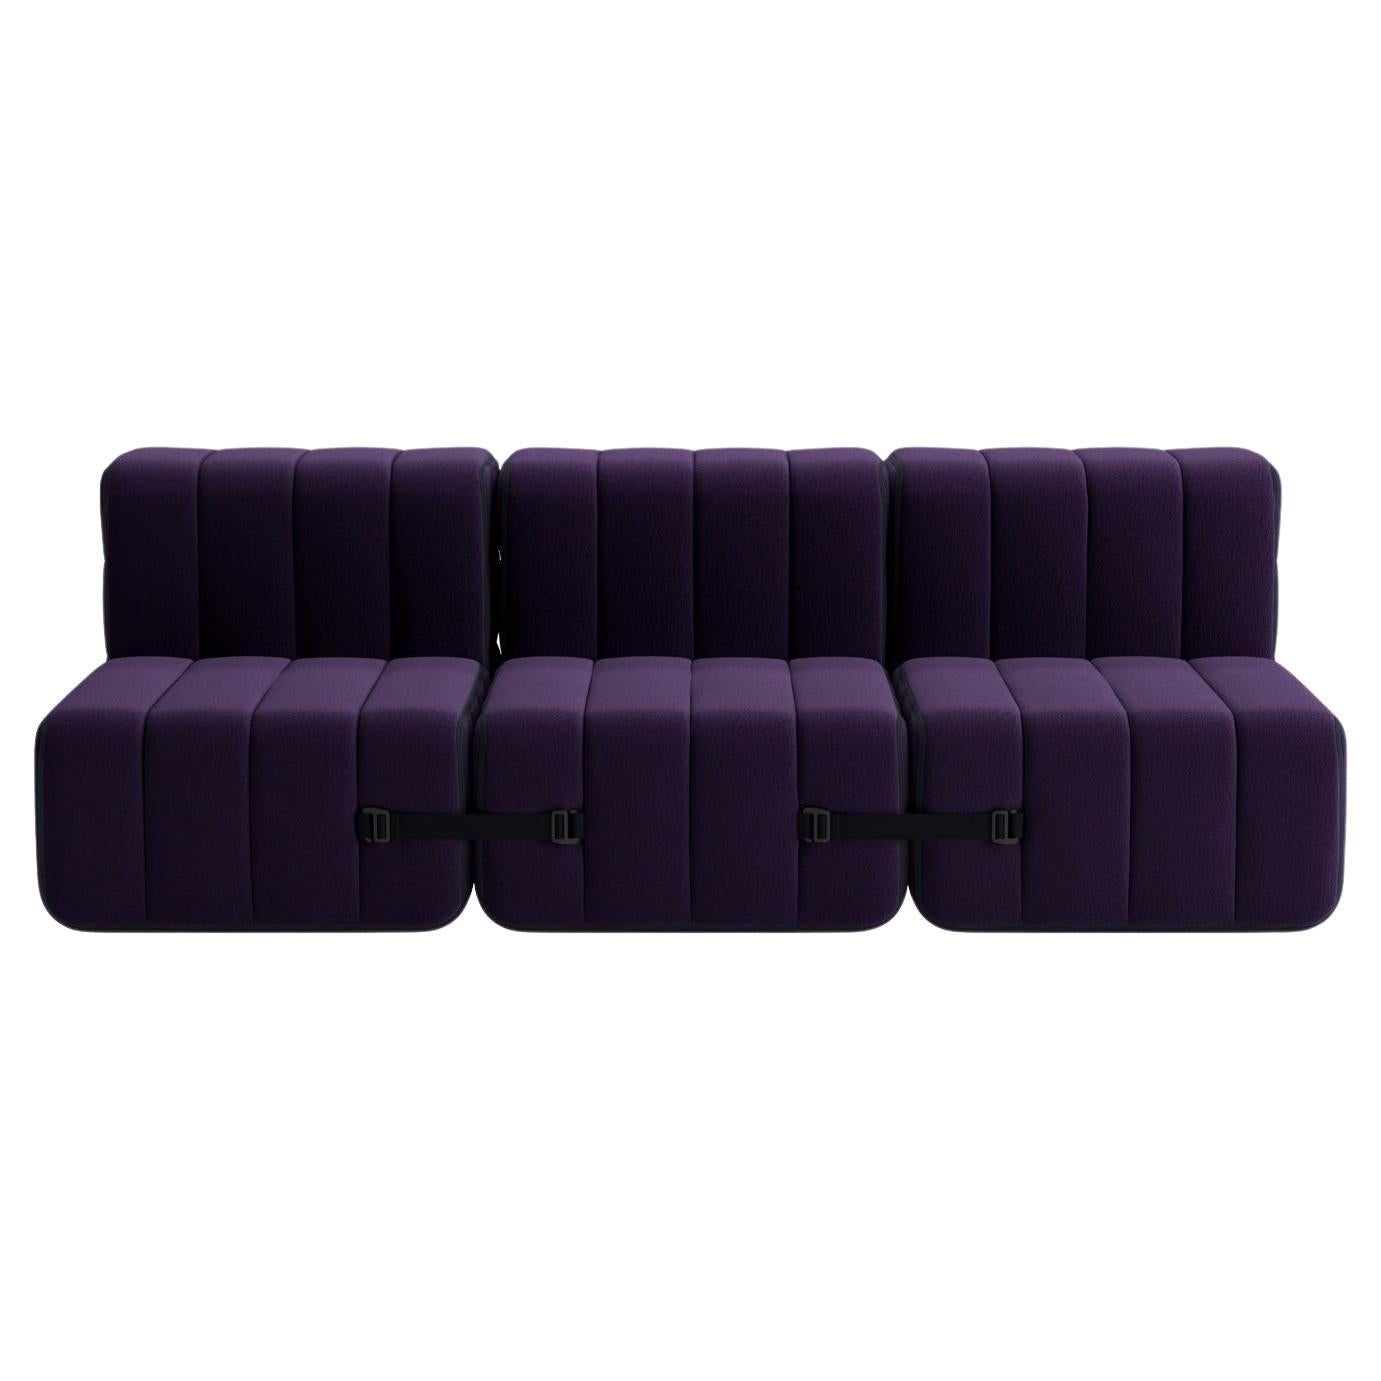 Curt Set 6 Modules, Fabric Jet '9607 Blue / Purple', Curt Modular Sofa System For Sale